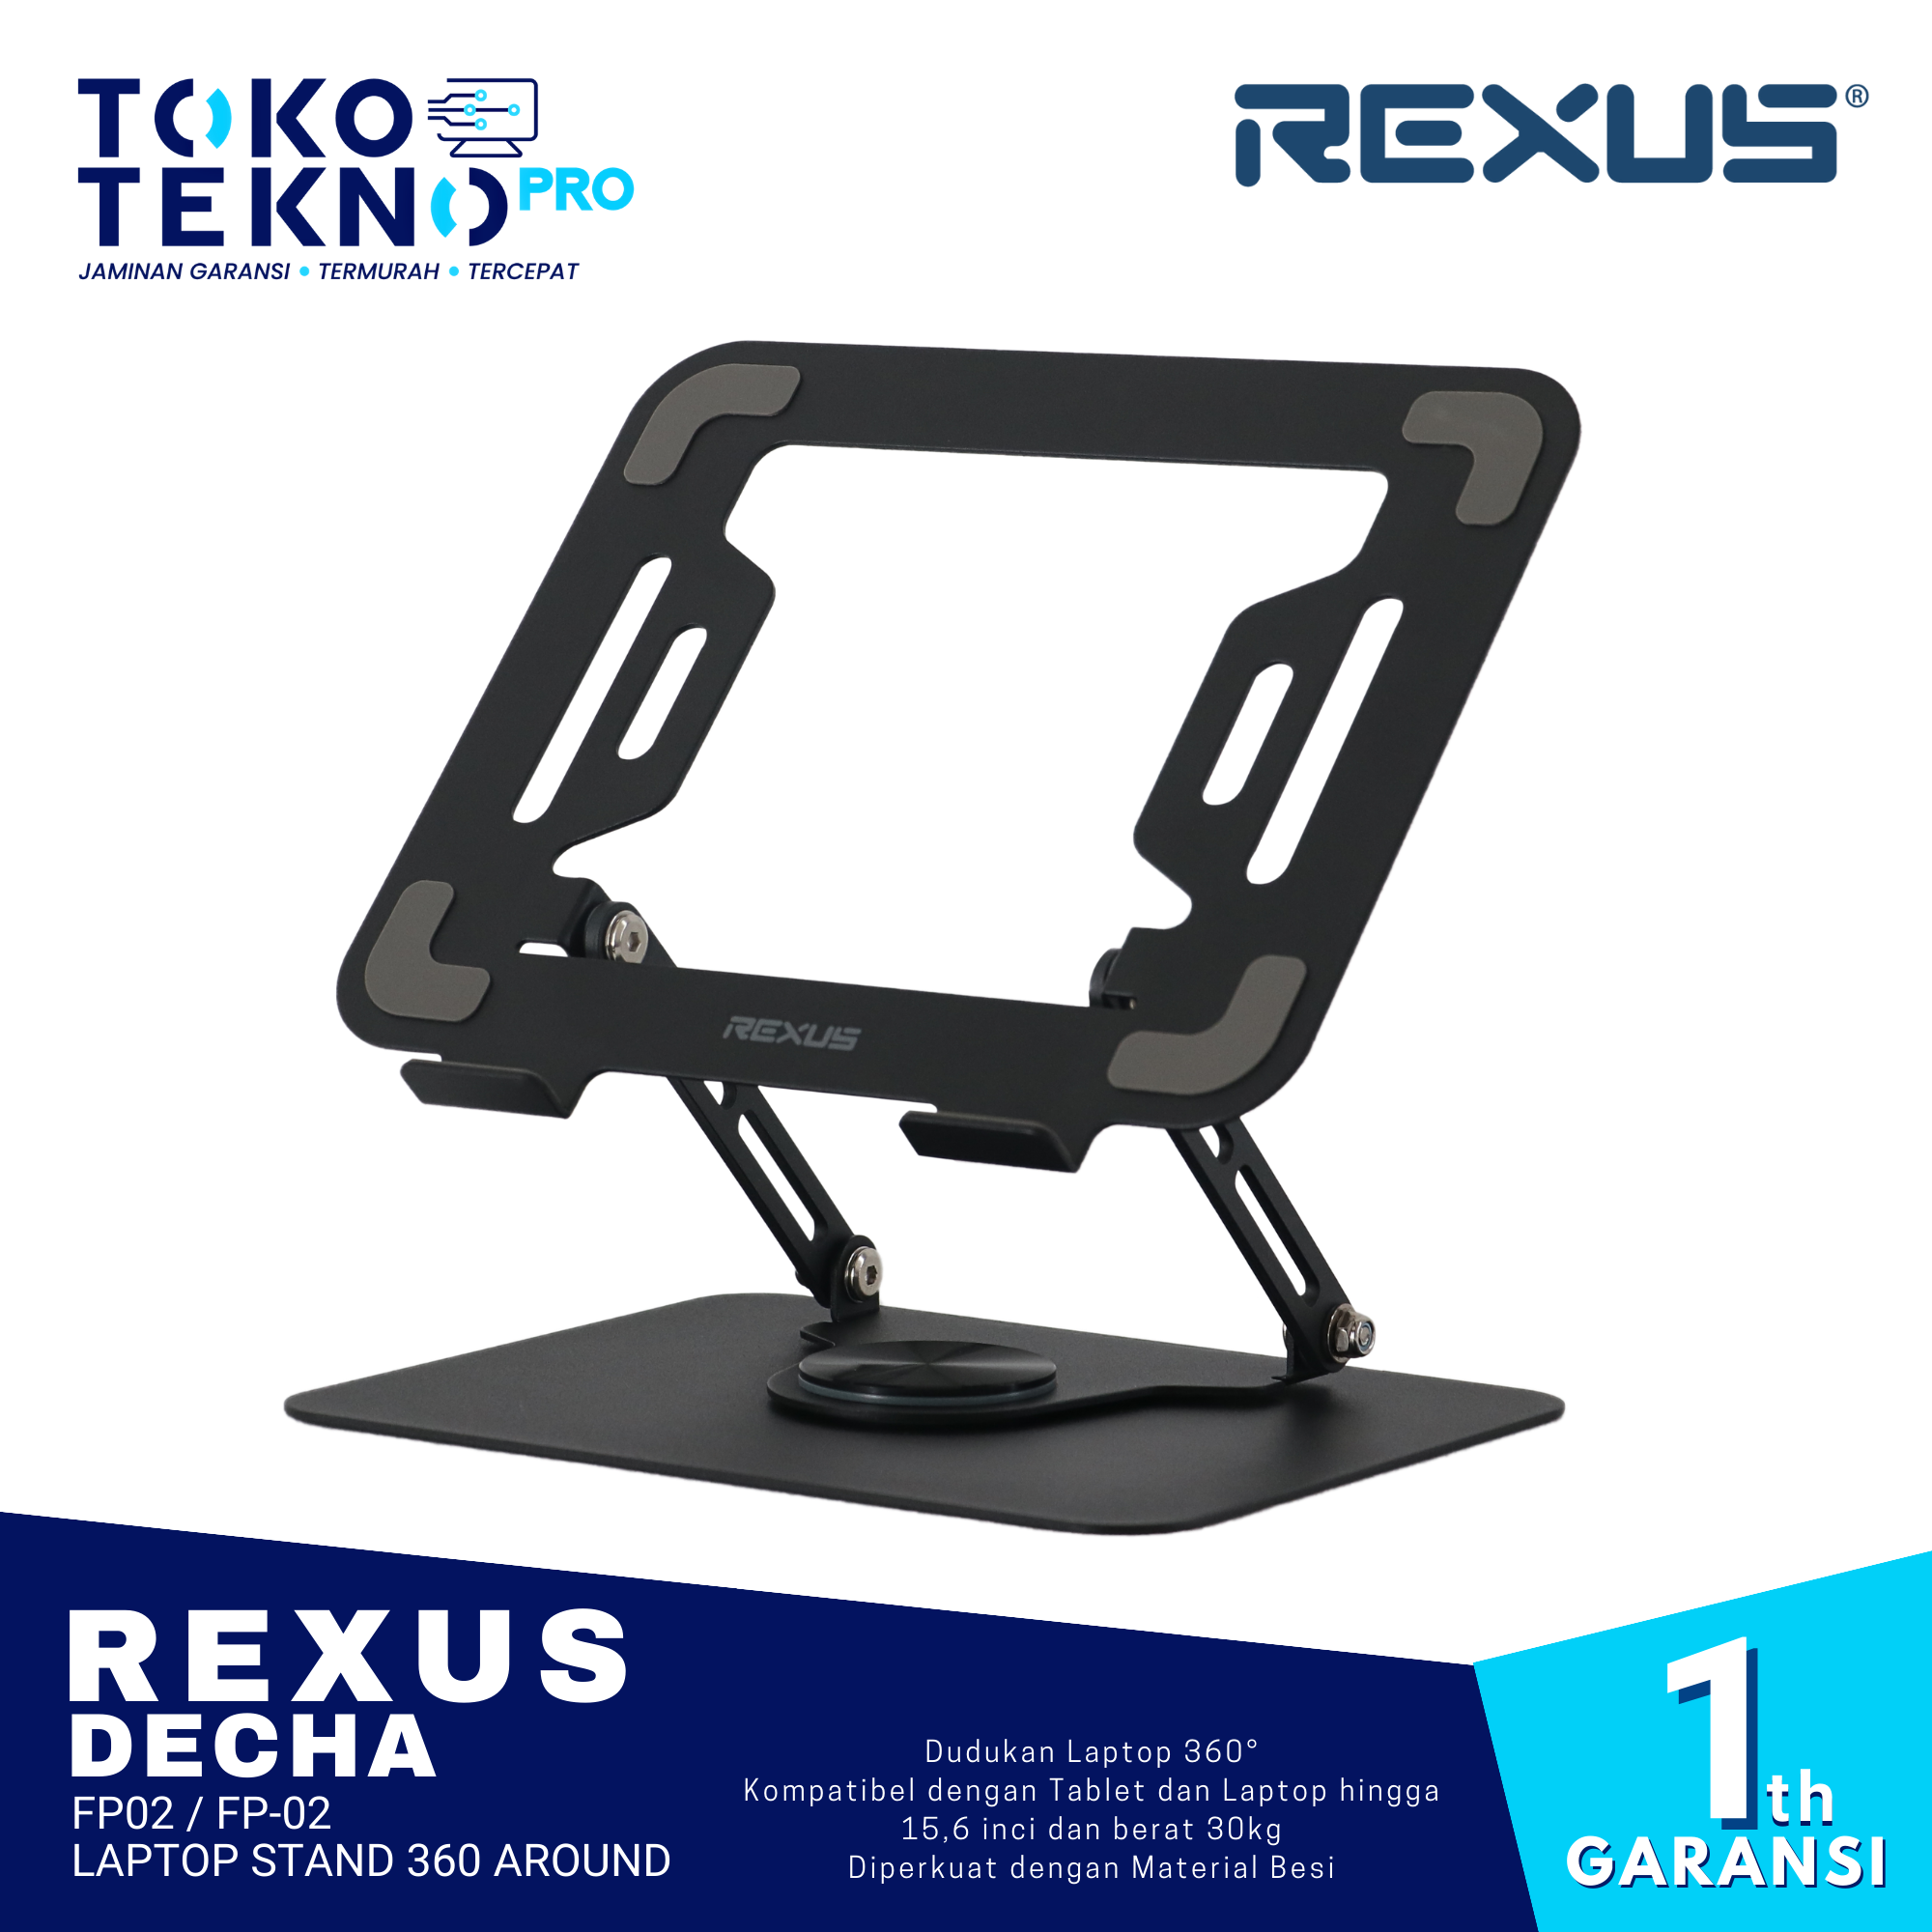 Rexus Decha FP02 Laptop Stand 360 Around